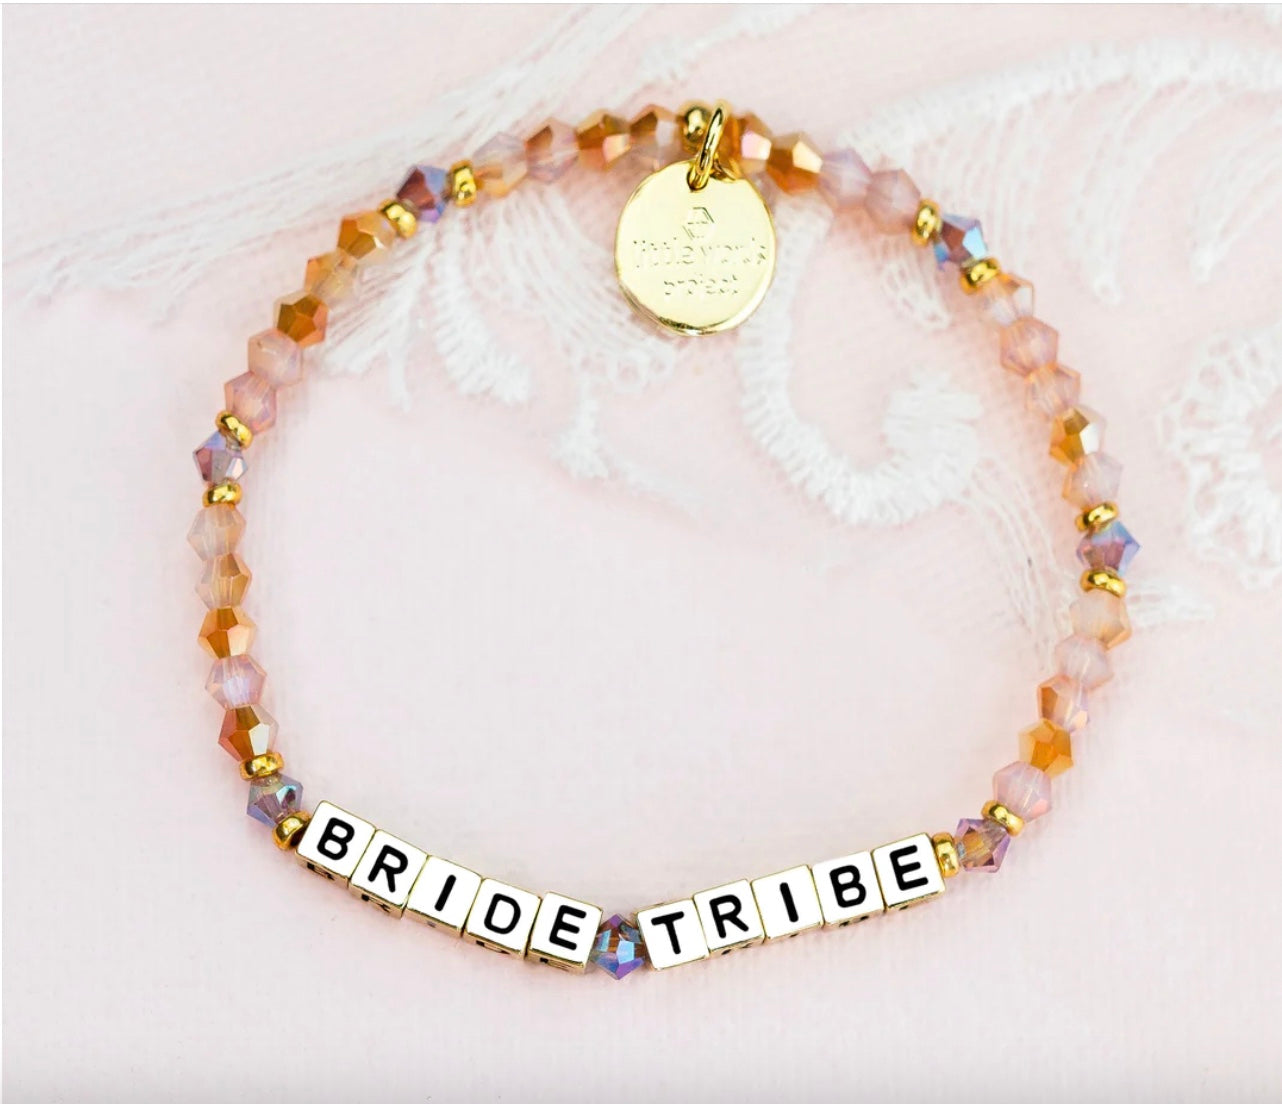 Bride Tribe Little Words Bracelet